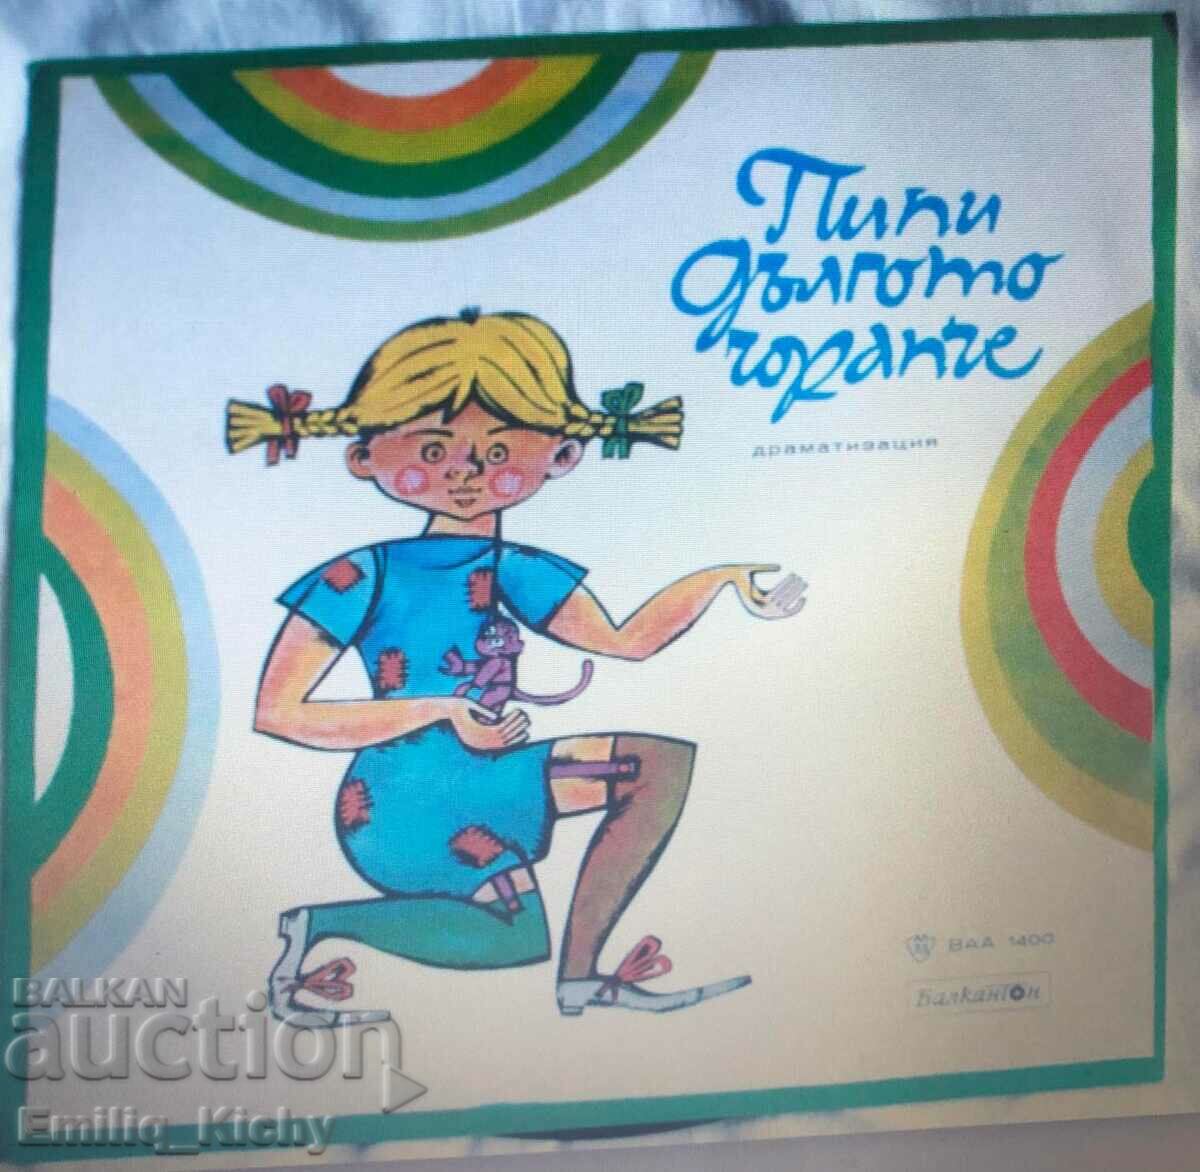 Pippi Longstocking gramophone record